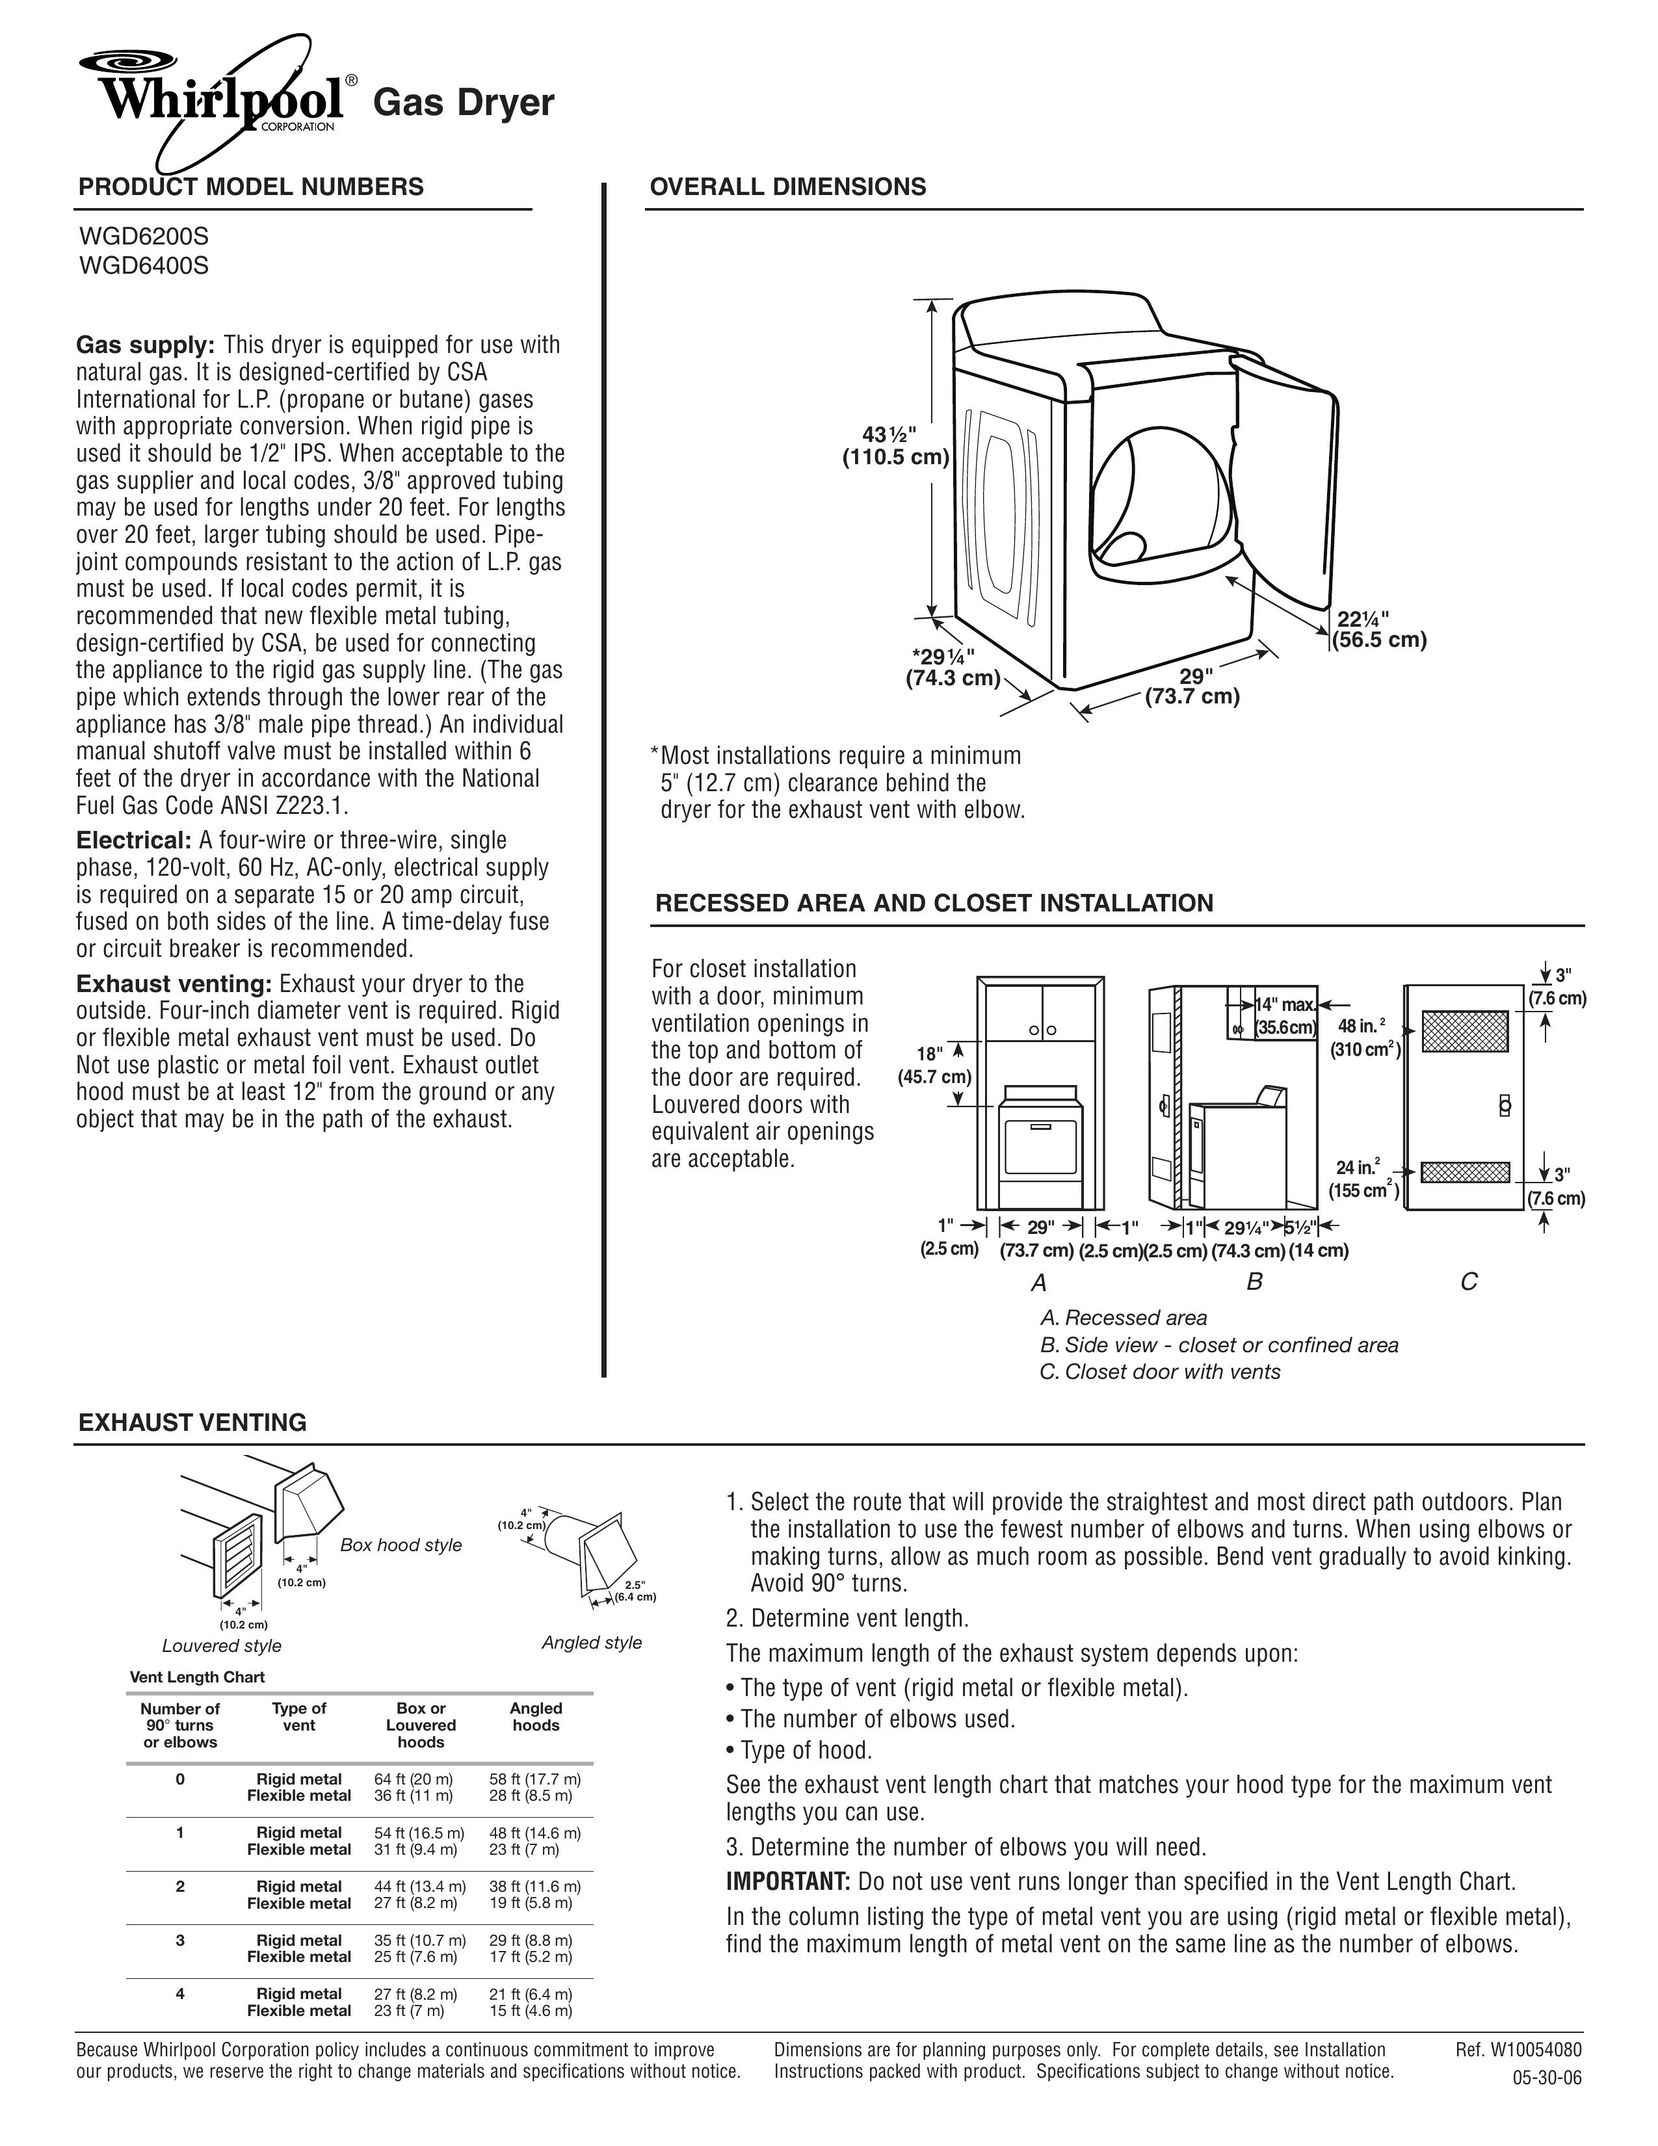 Whirlpool WGD6400S Computer Monitor User Manual